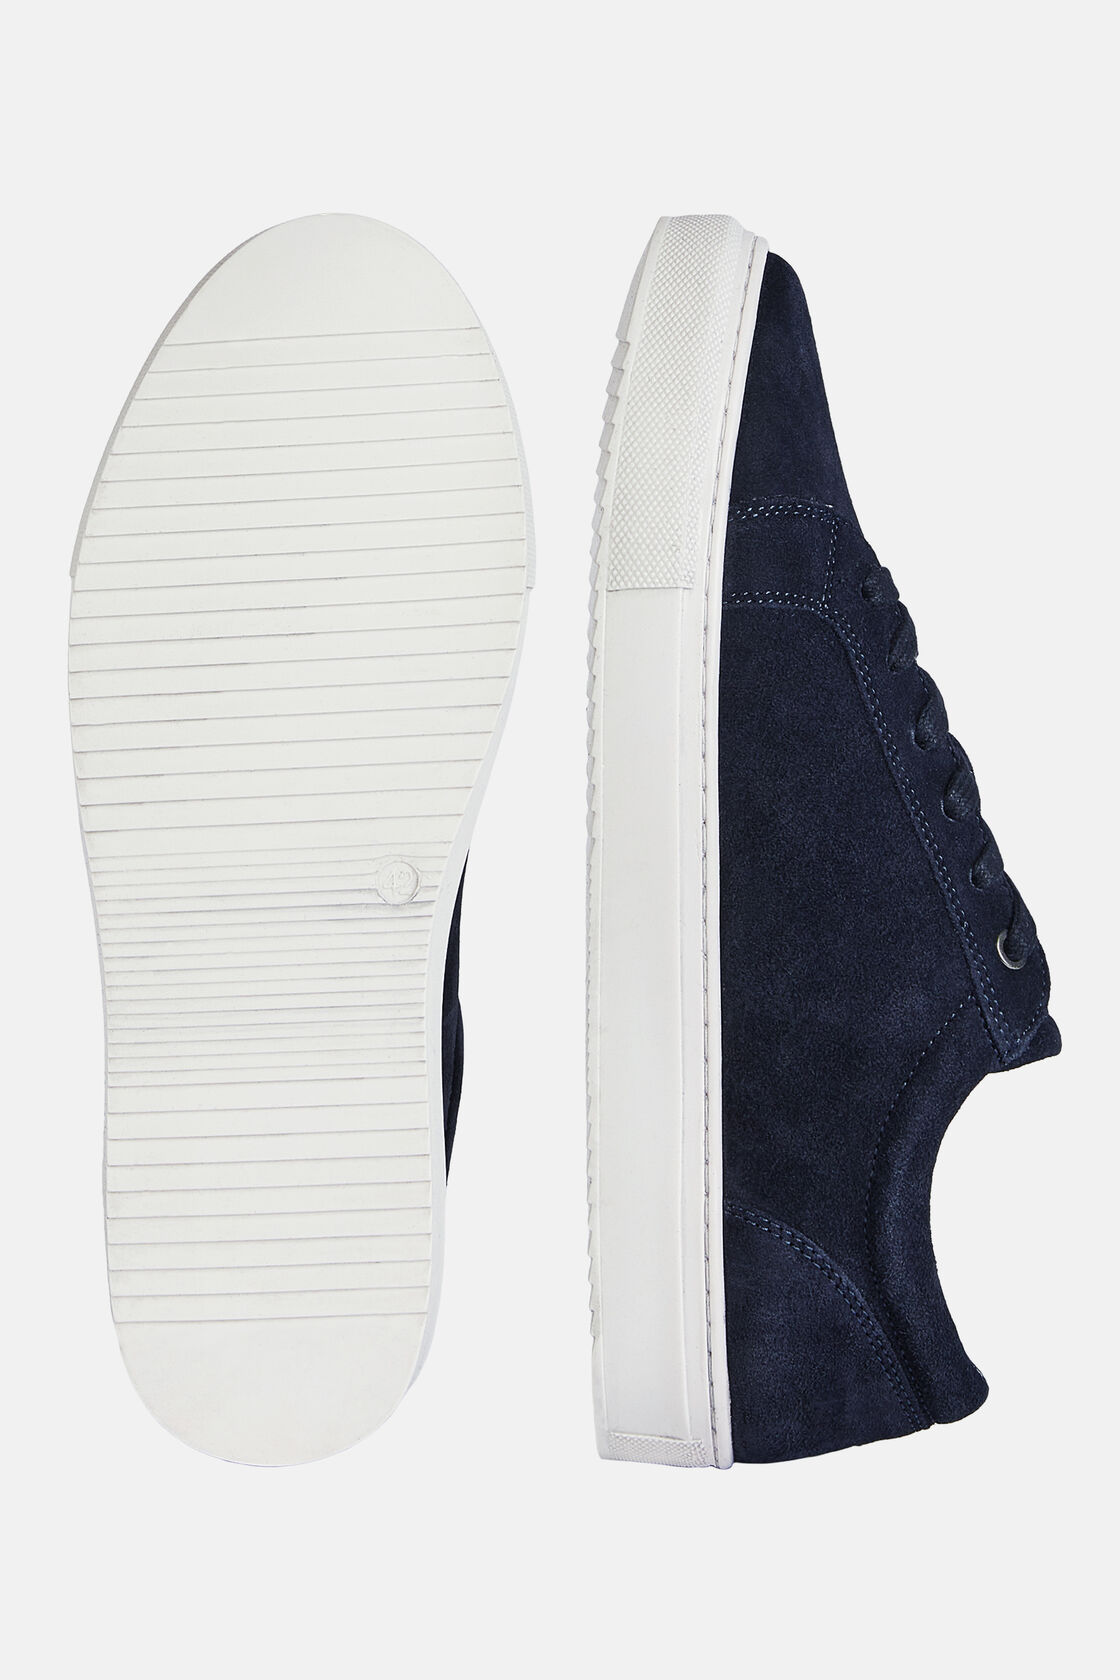 Navyblauer Sneaker mit Kassettensohle, Navy blau, hi-res